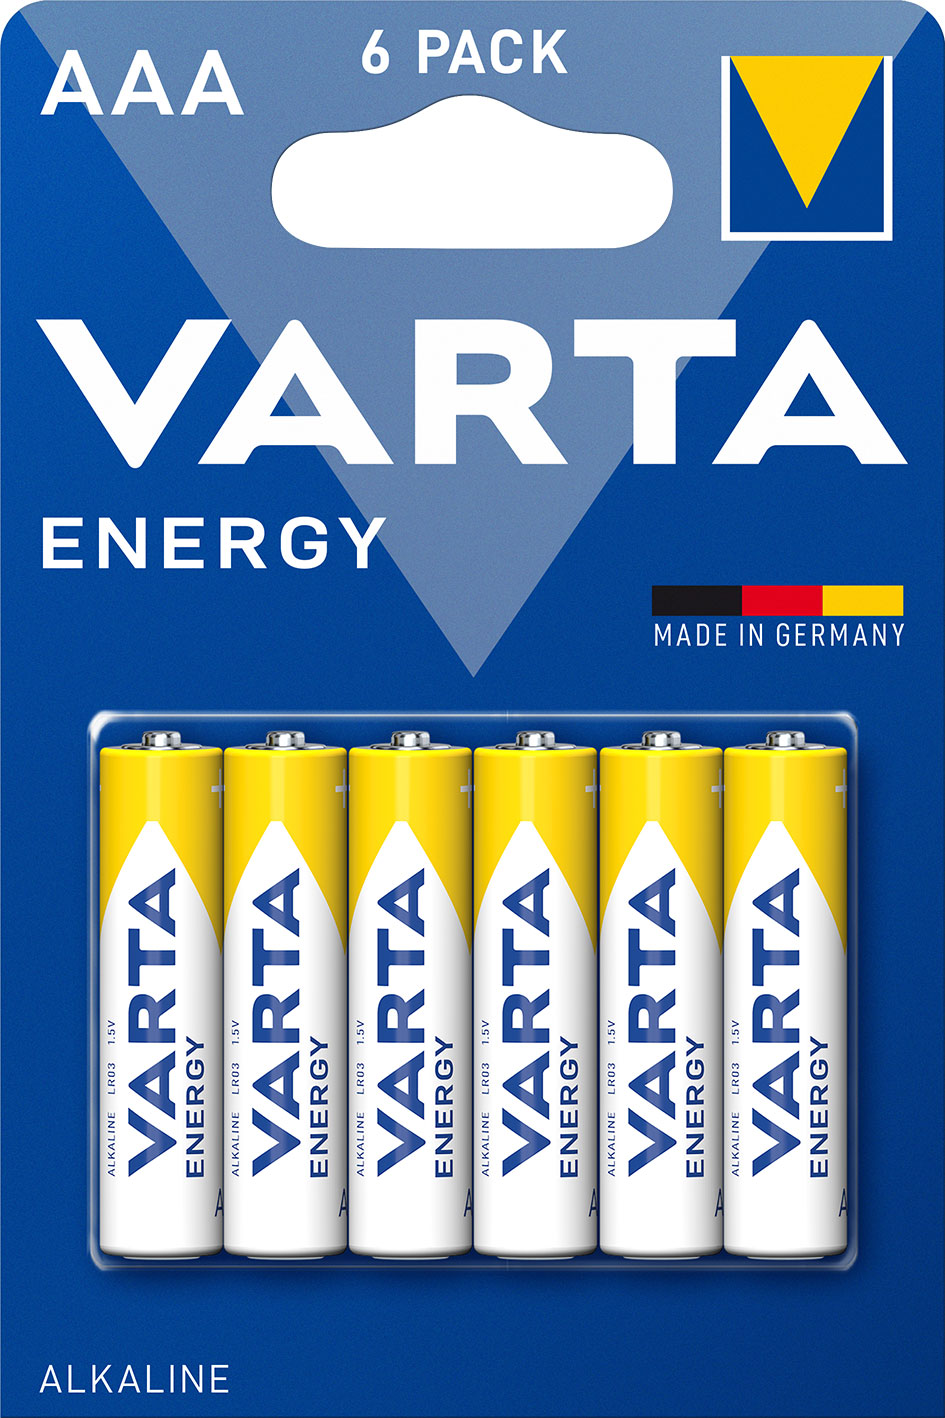 VARTA ENERGY 6 AAA